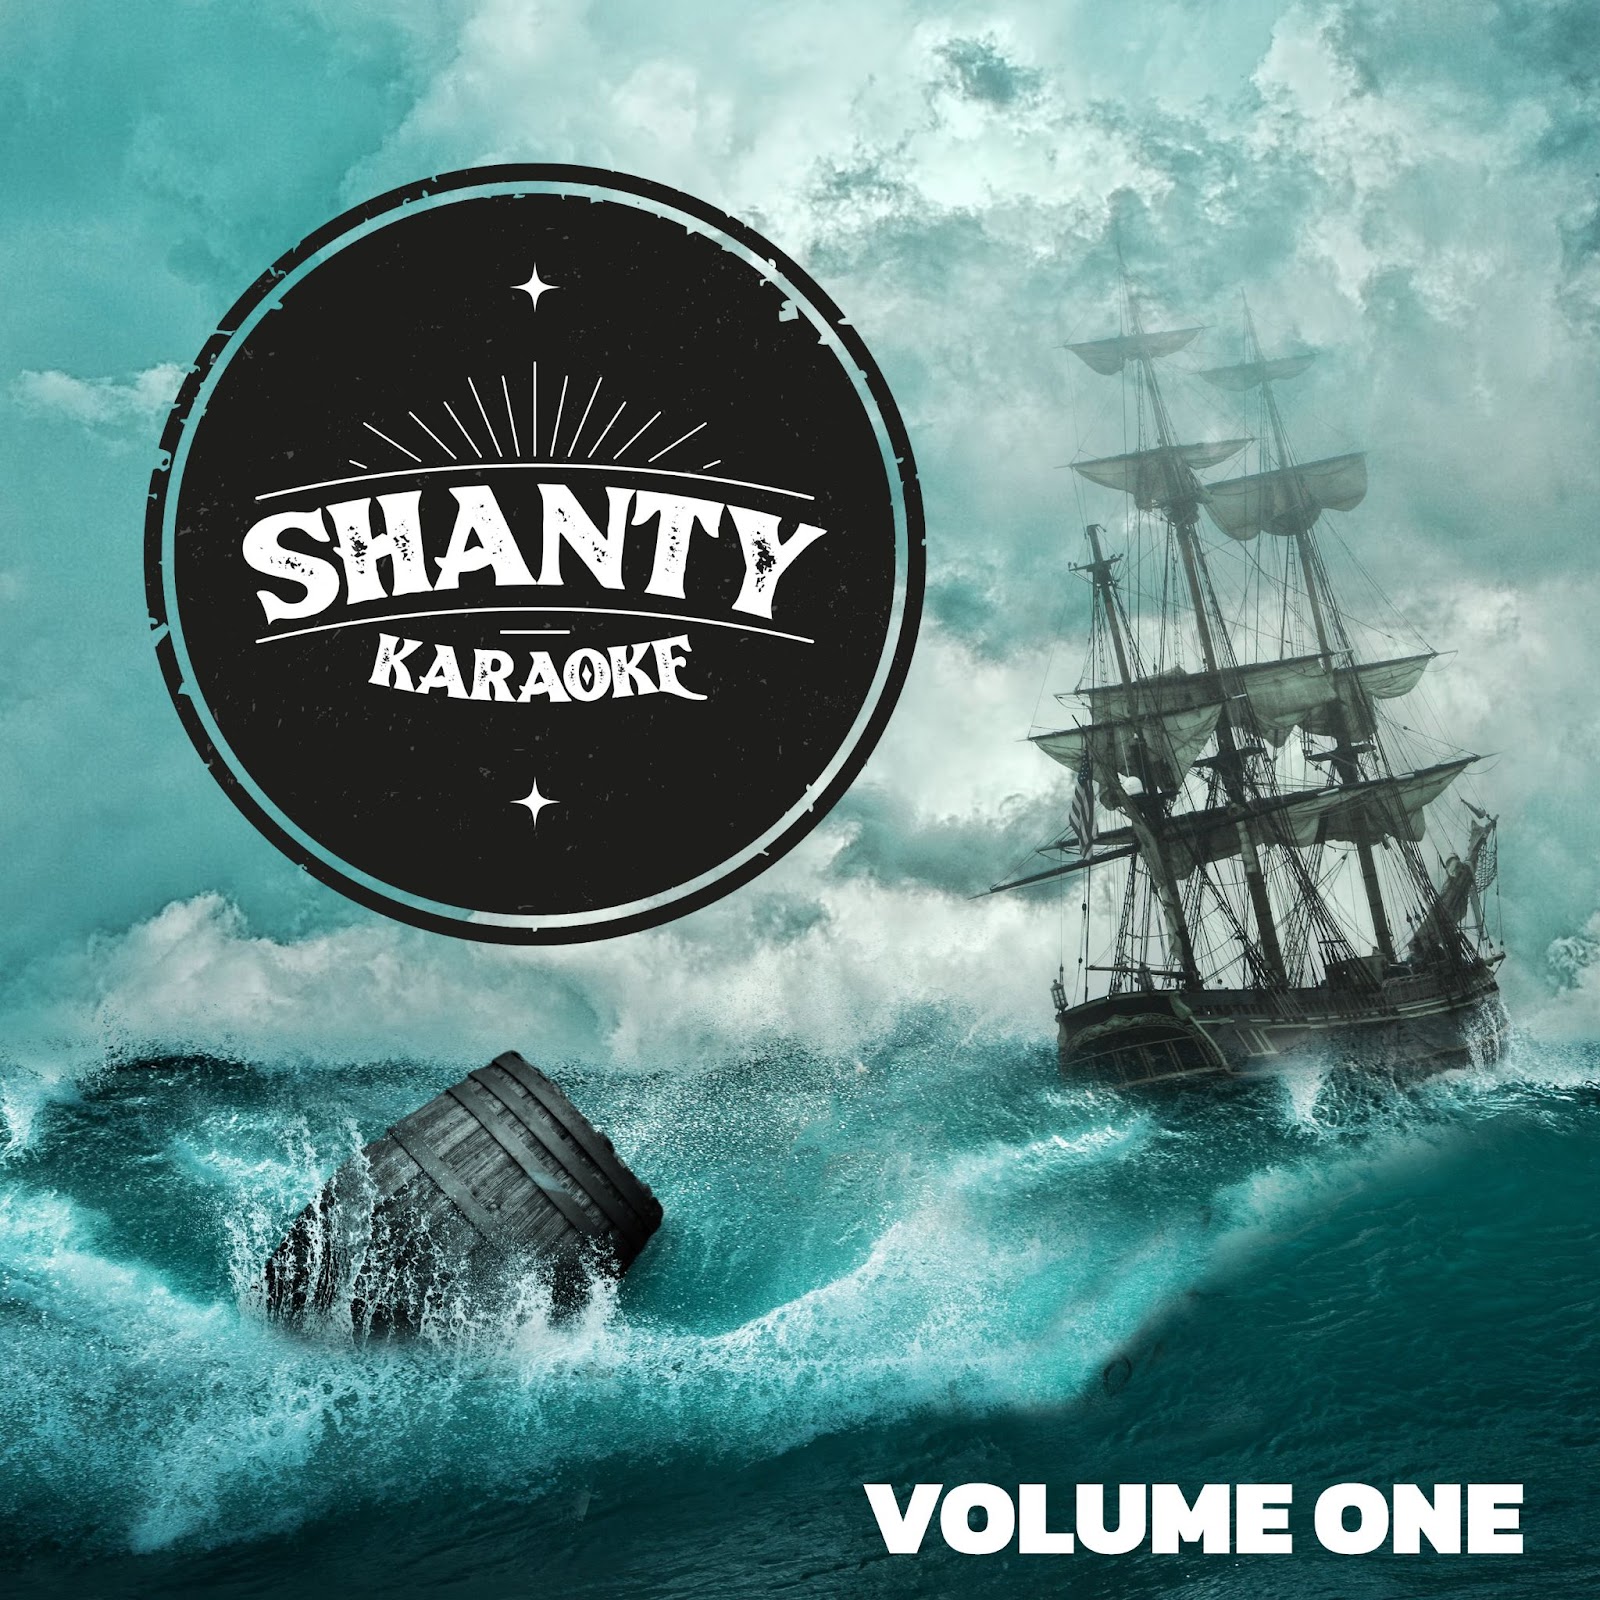 Shanty Karaoke – Volume One (Album Cover)